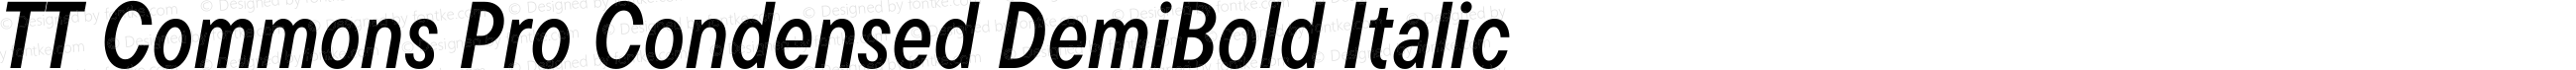 TT Commons Pro Condensed DemiBold Italic